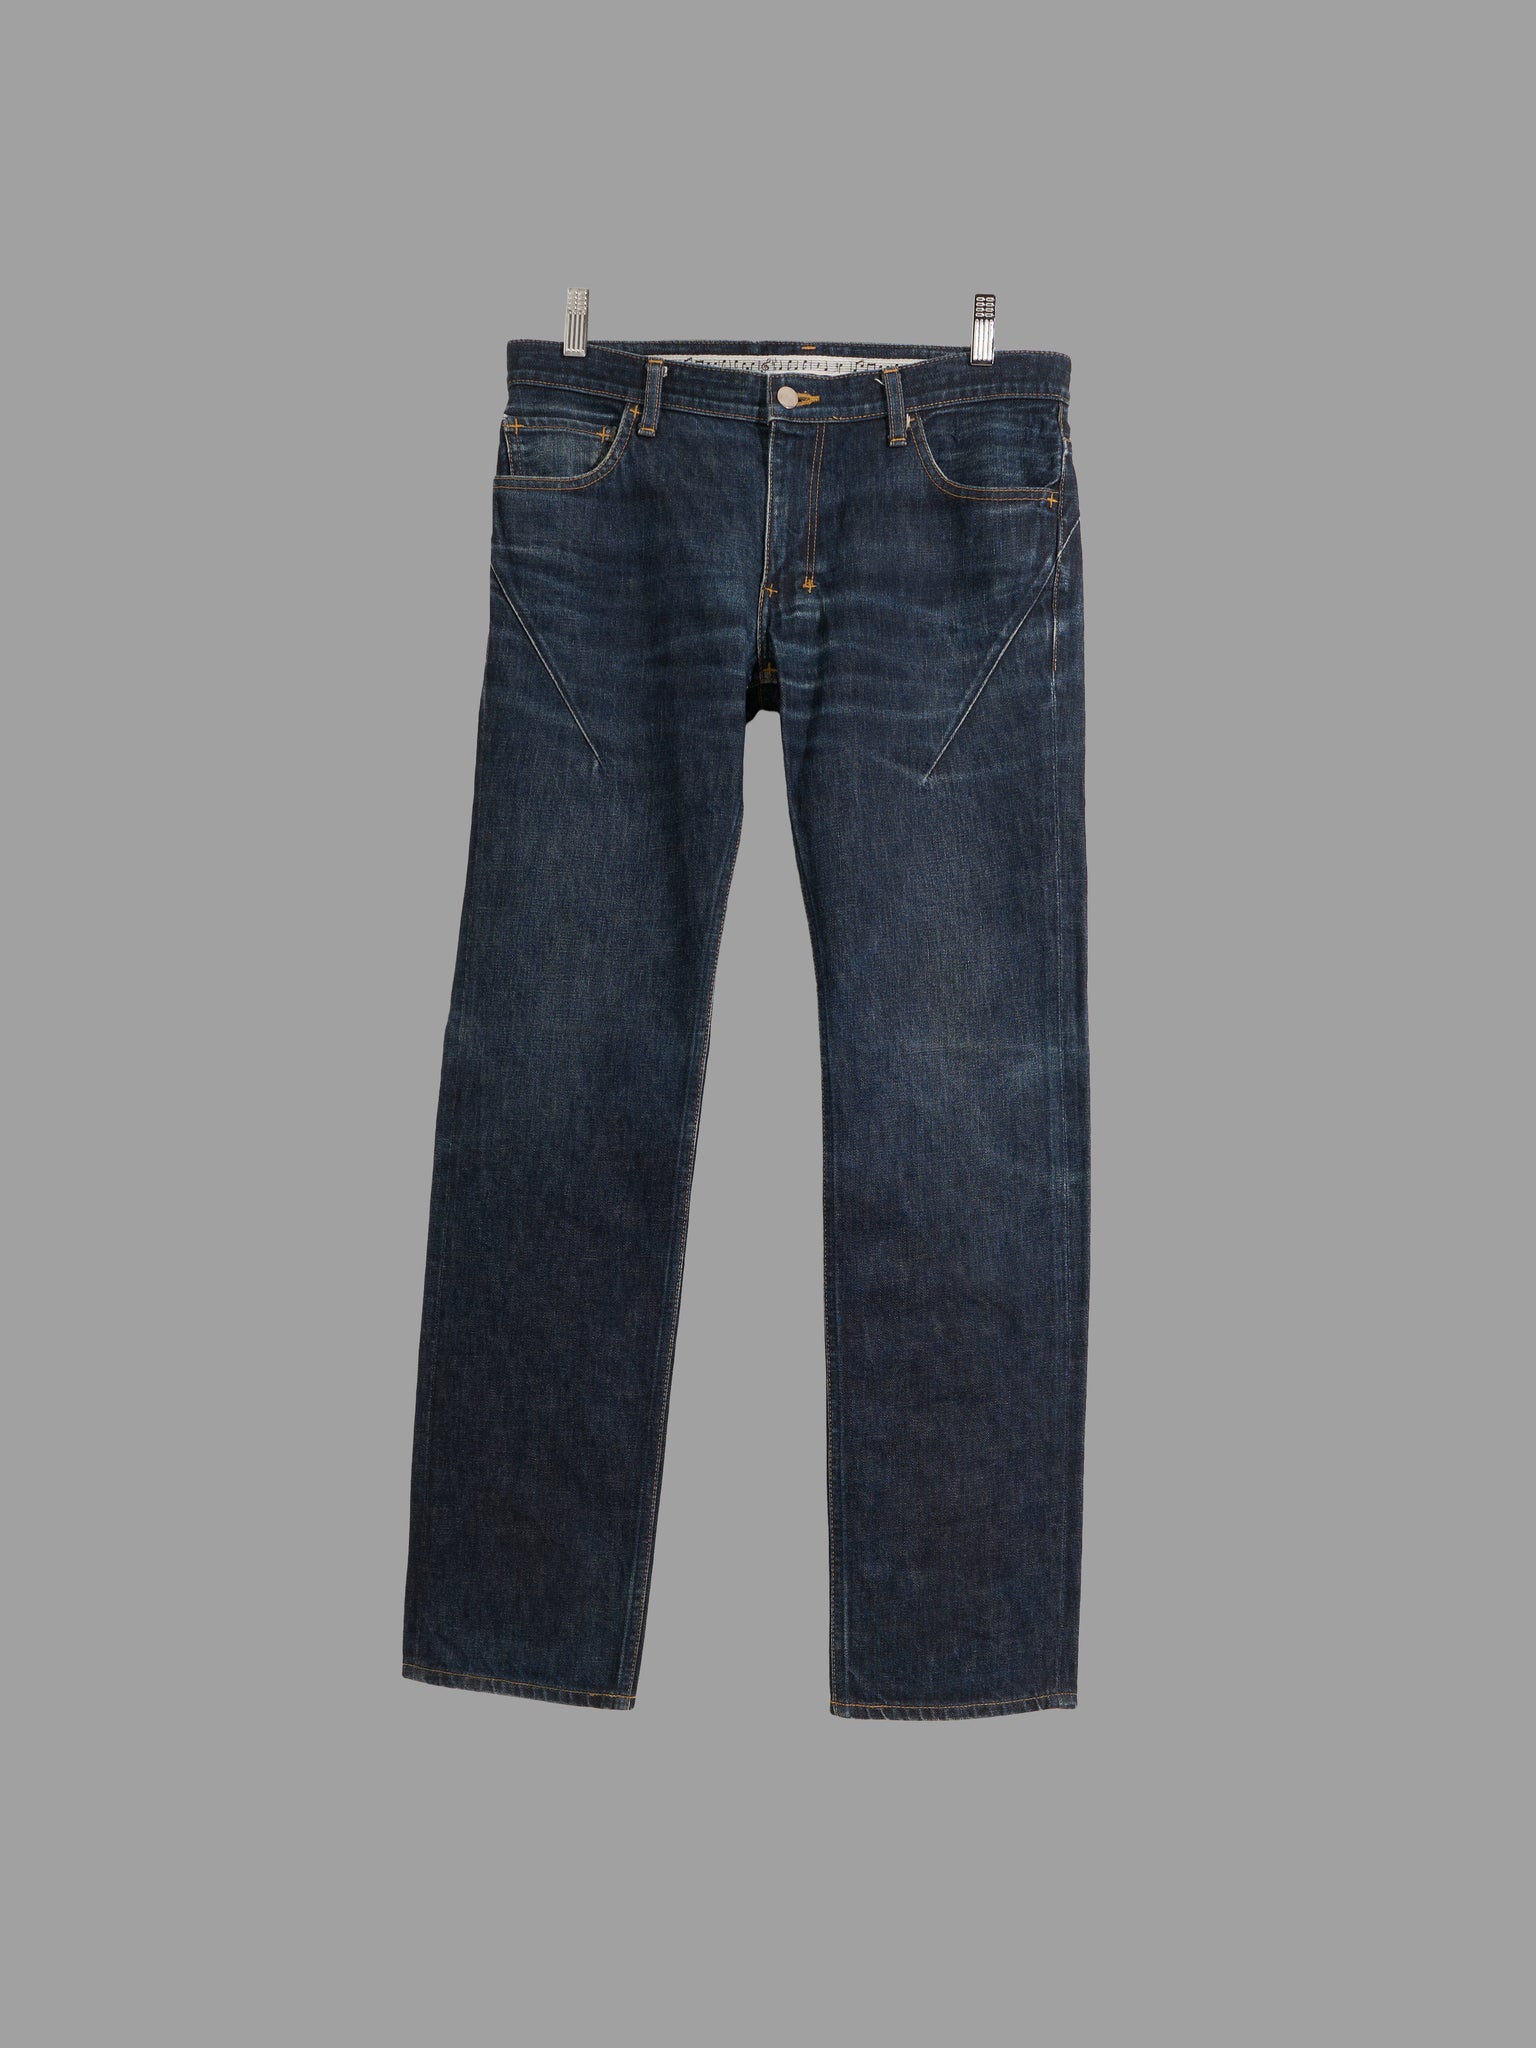 n(n) number (n)ine indigo cotton denim low rise tapered thigh dart jeans - sz 30